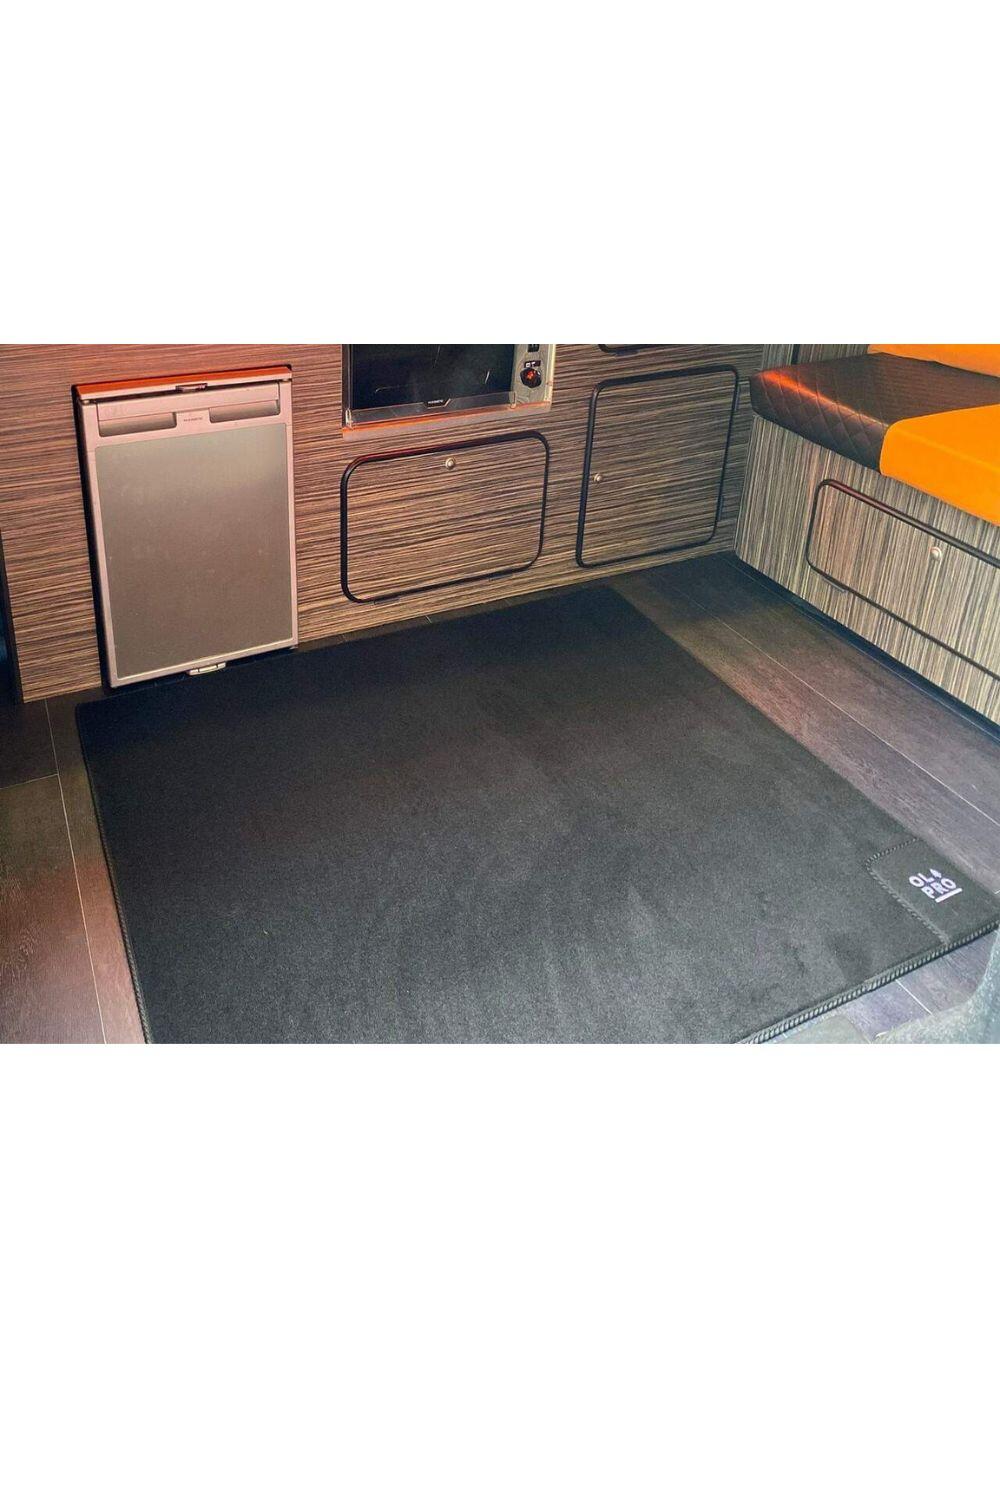 OLPRO OLPRO Rear Campervan Living Area Carpet 1m x 1.2m